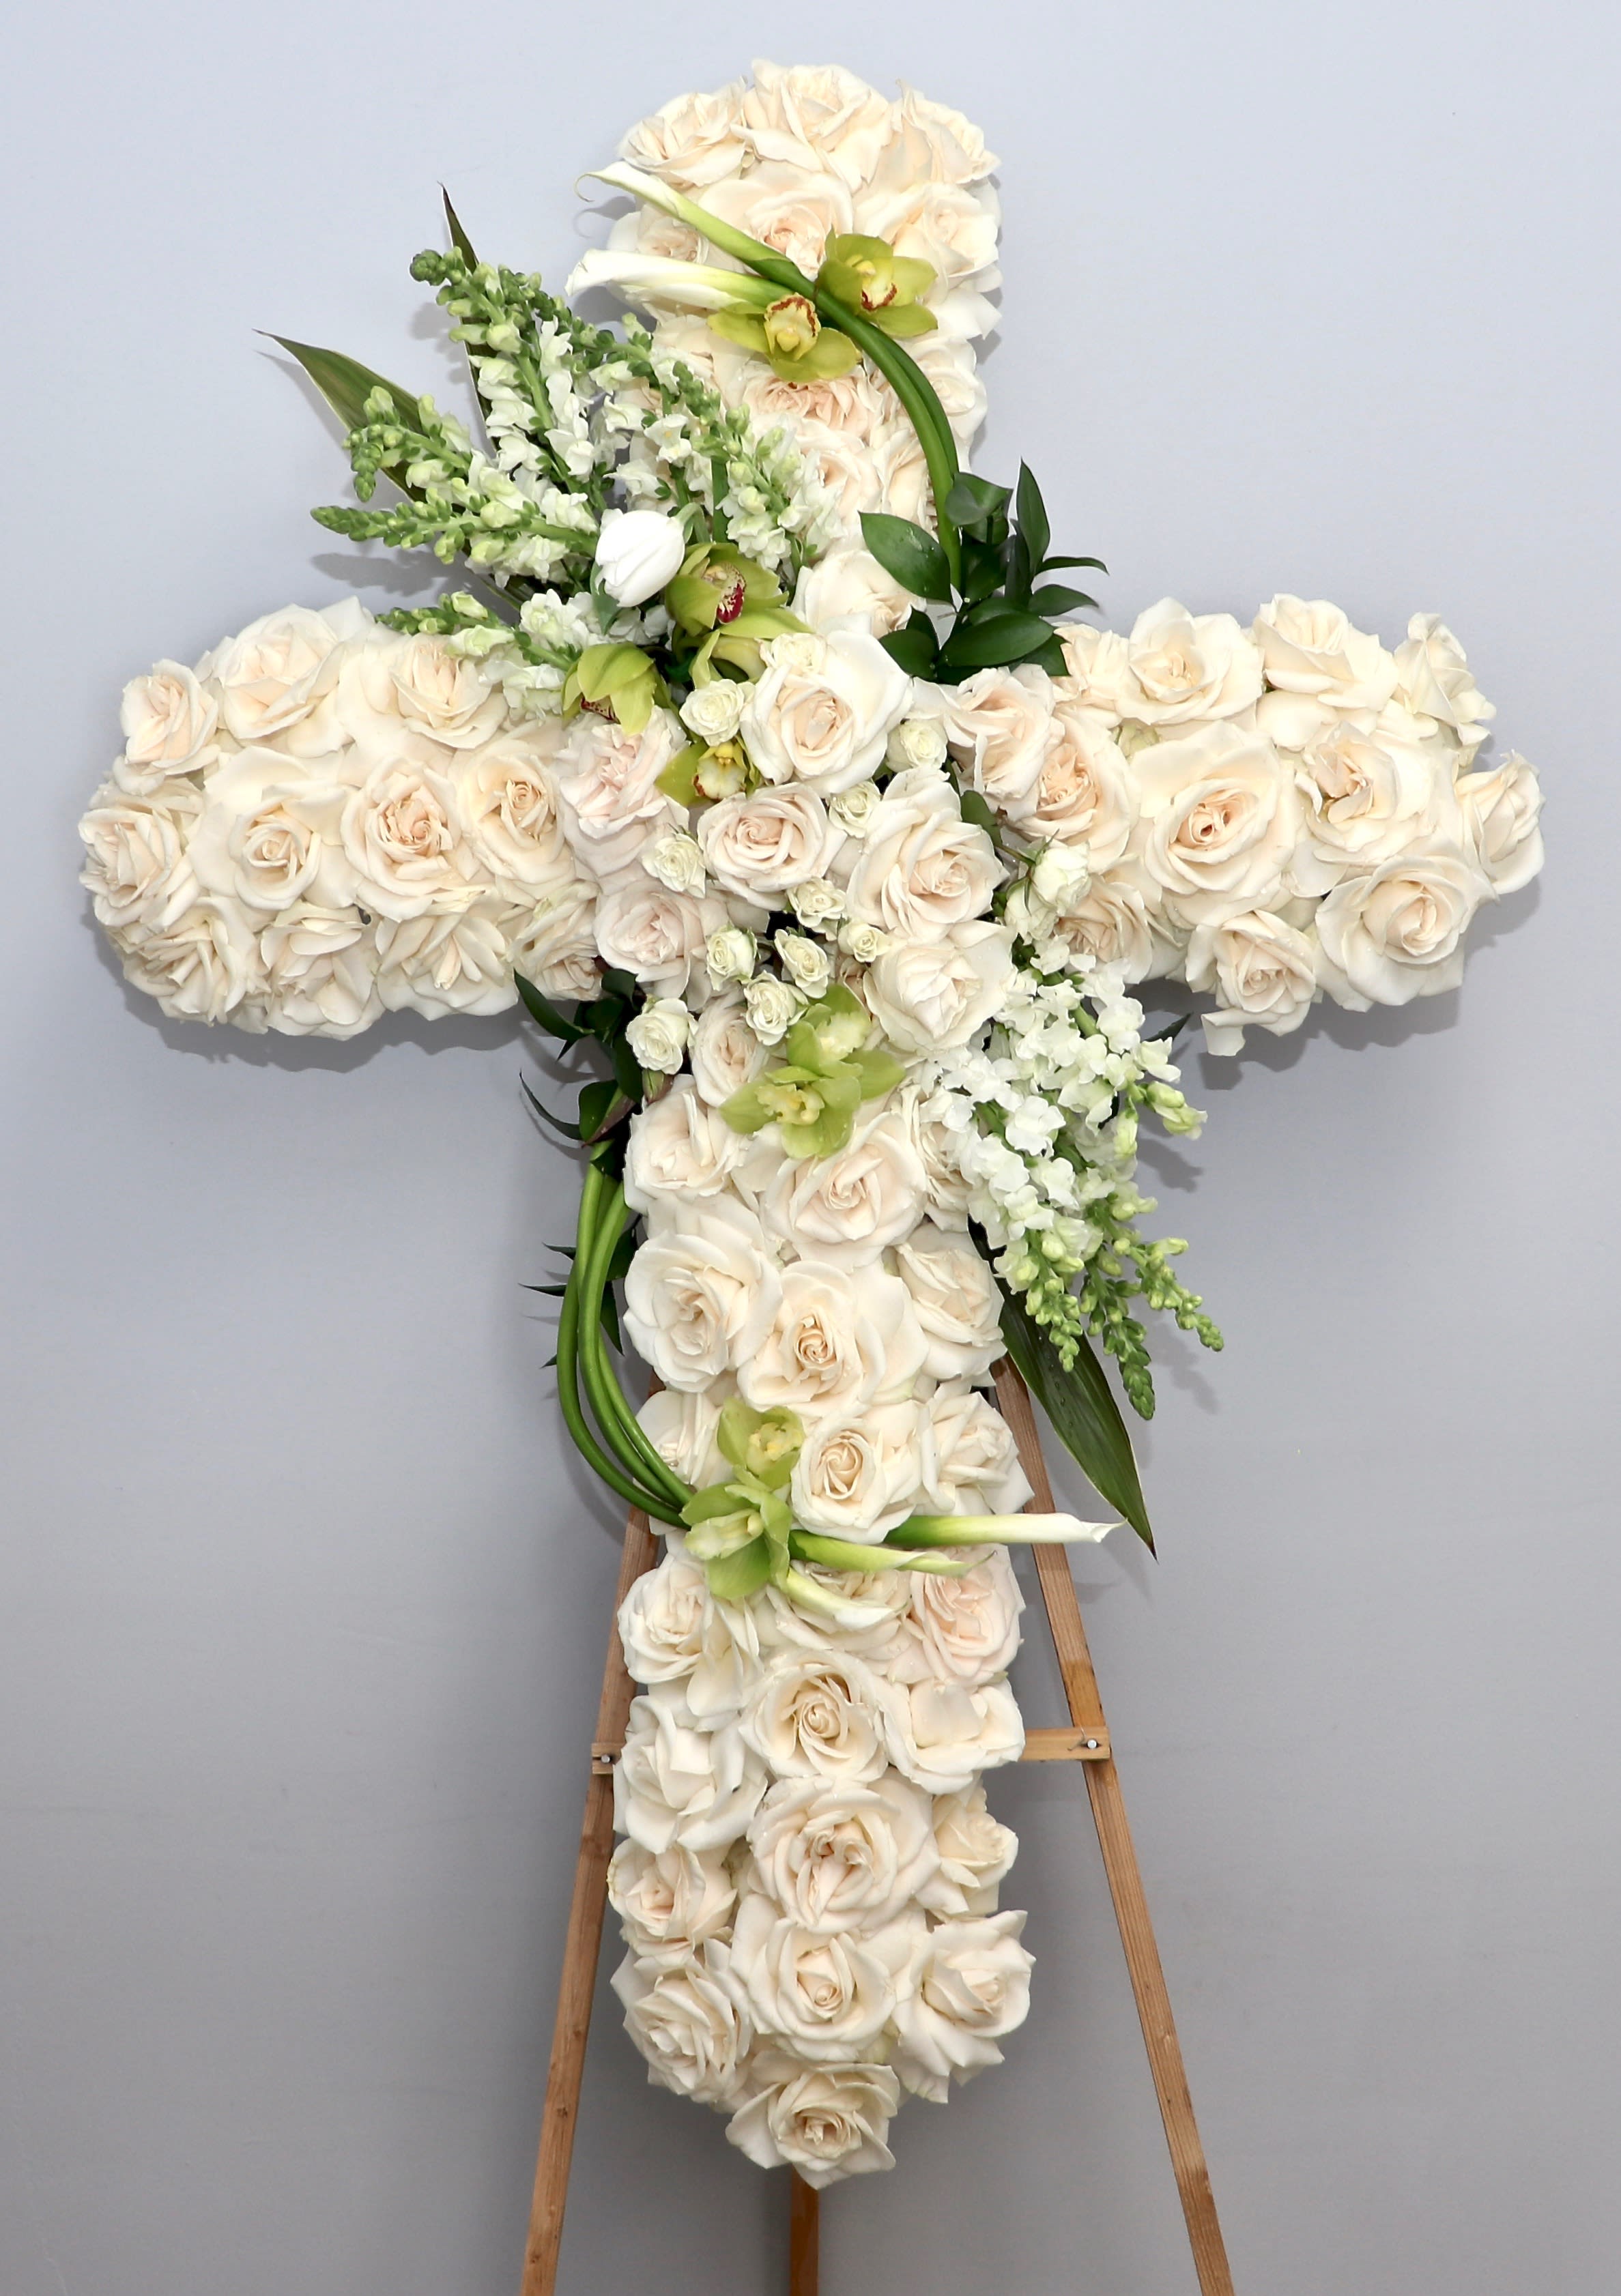 White Cross And Calla Lillies Funeral Service Glendale Florist In Glendale Ca Glendale Florist